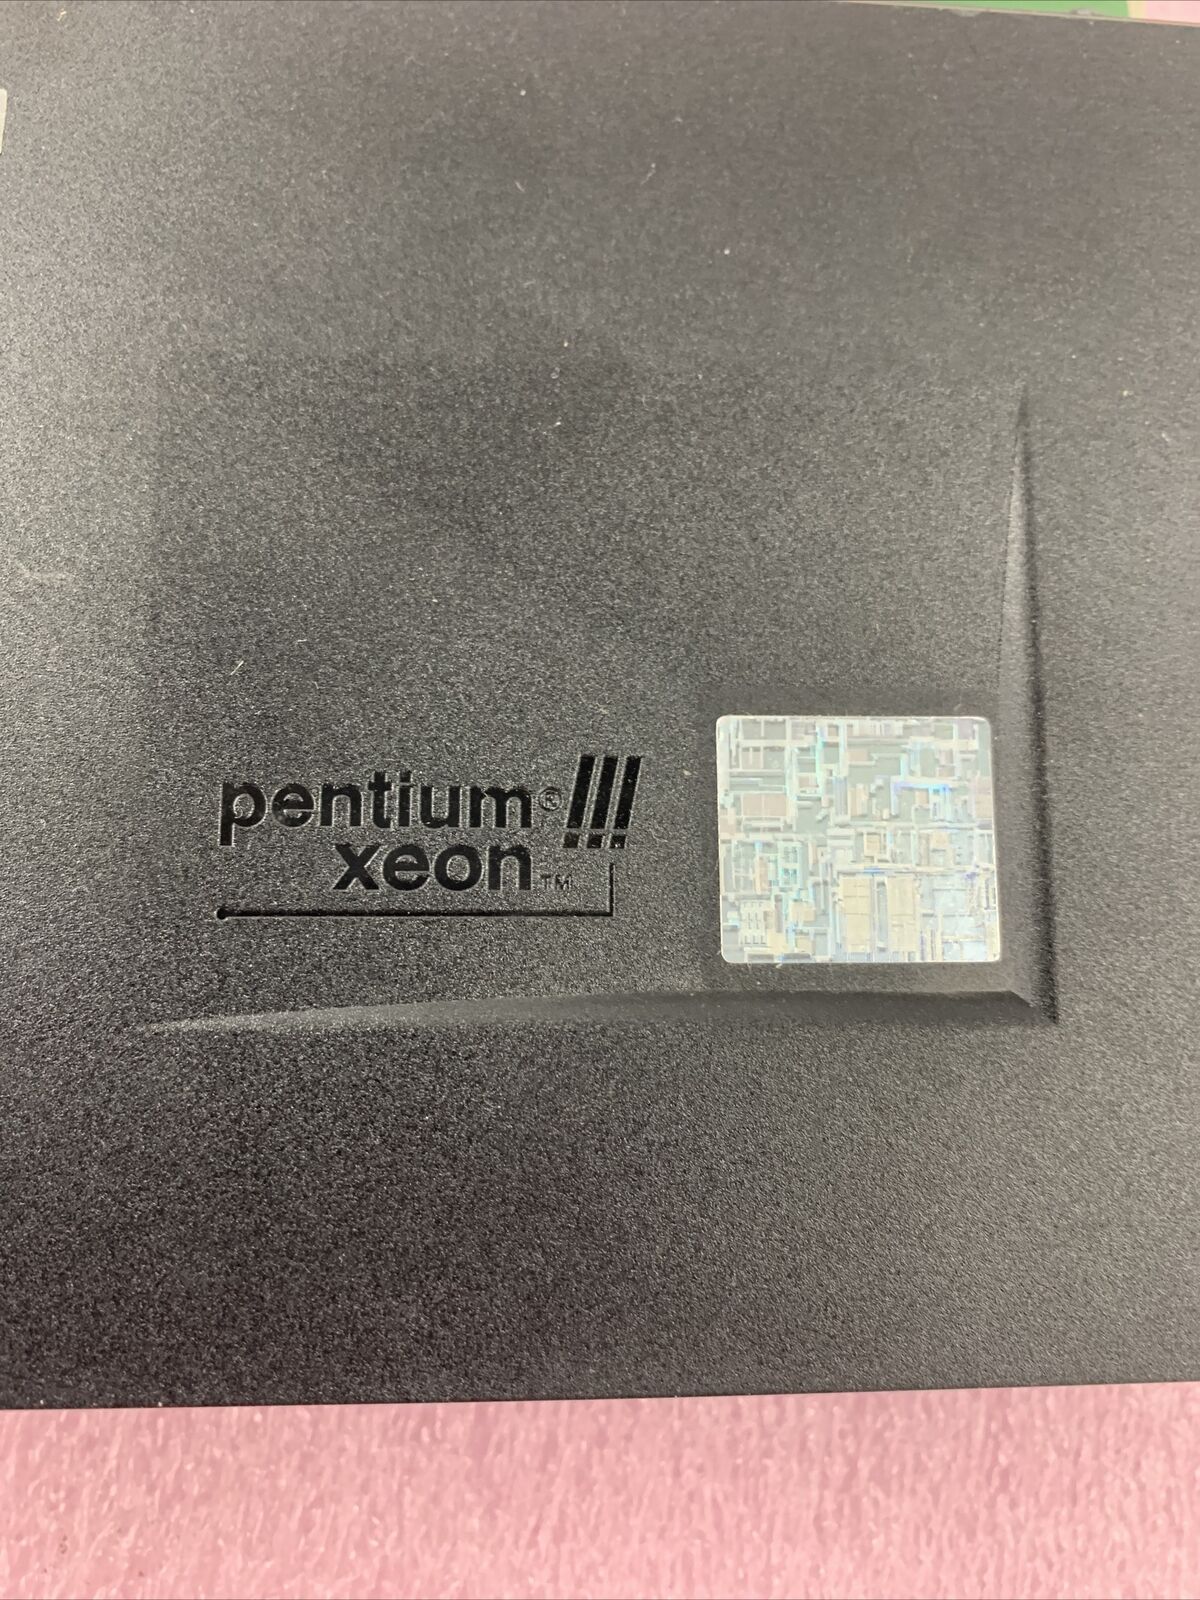 CPQ 175292-001 Compaq Intel Pentium III 700 Xeon Processor with 1MB Cache SL49Q